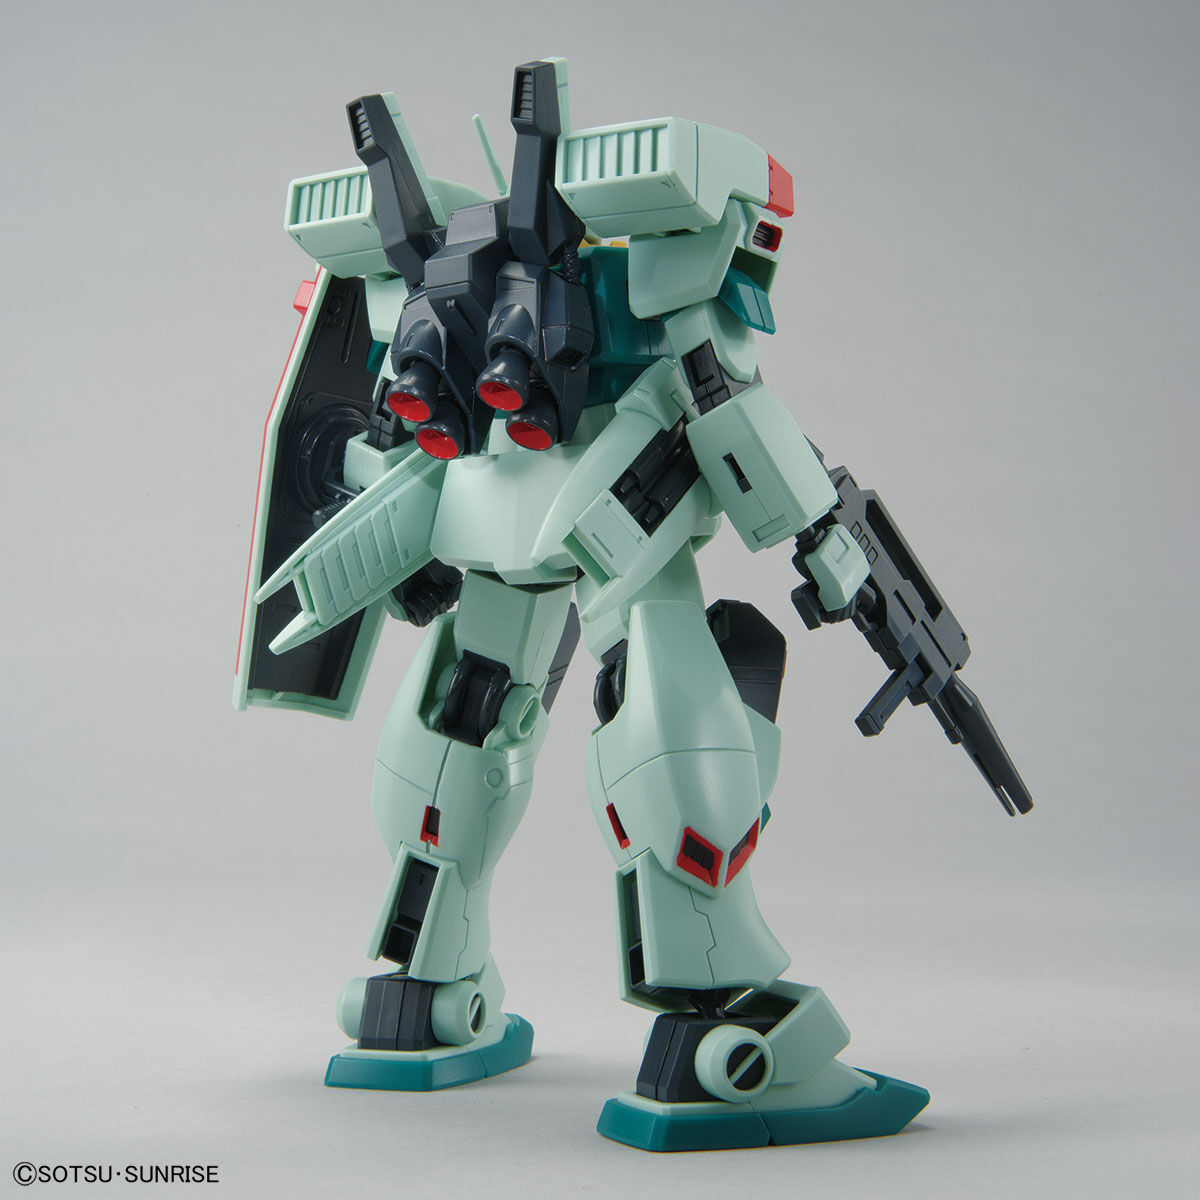 HGUC 1/144 RGM-79 Gundam type Mass-production model + RMS-179(RGM-79R) GMⅡ + RGM-86R GMⅢ set